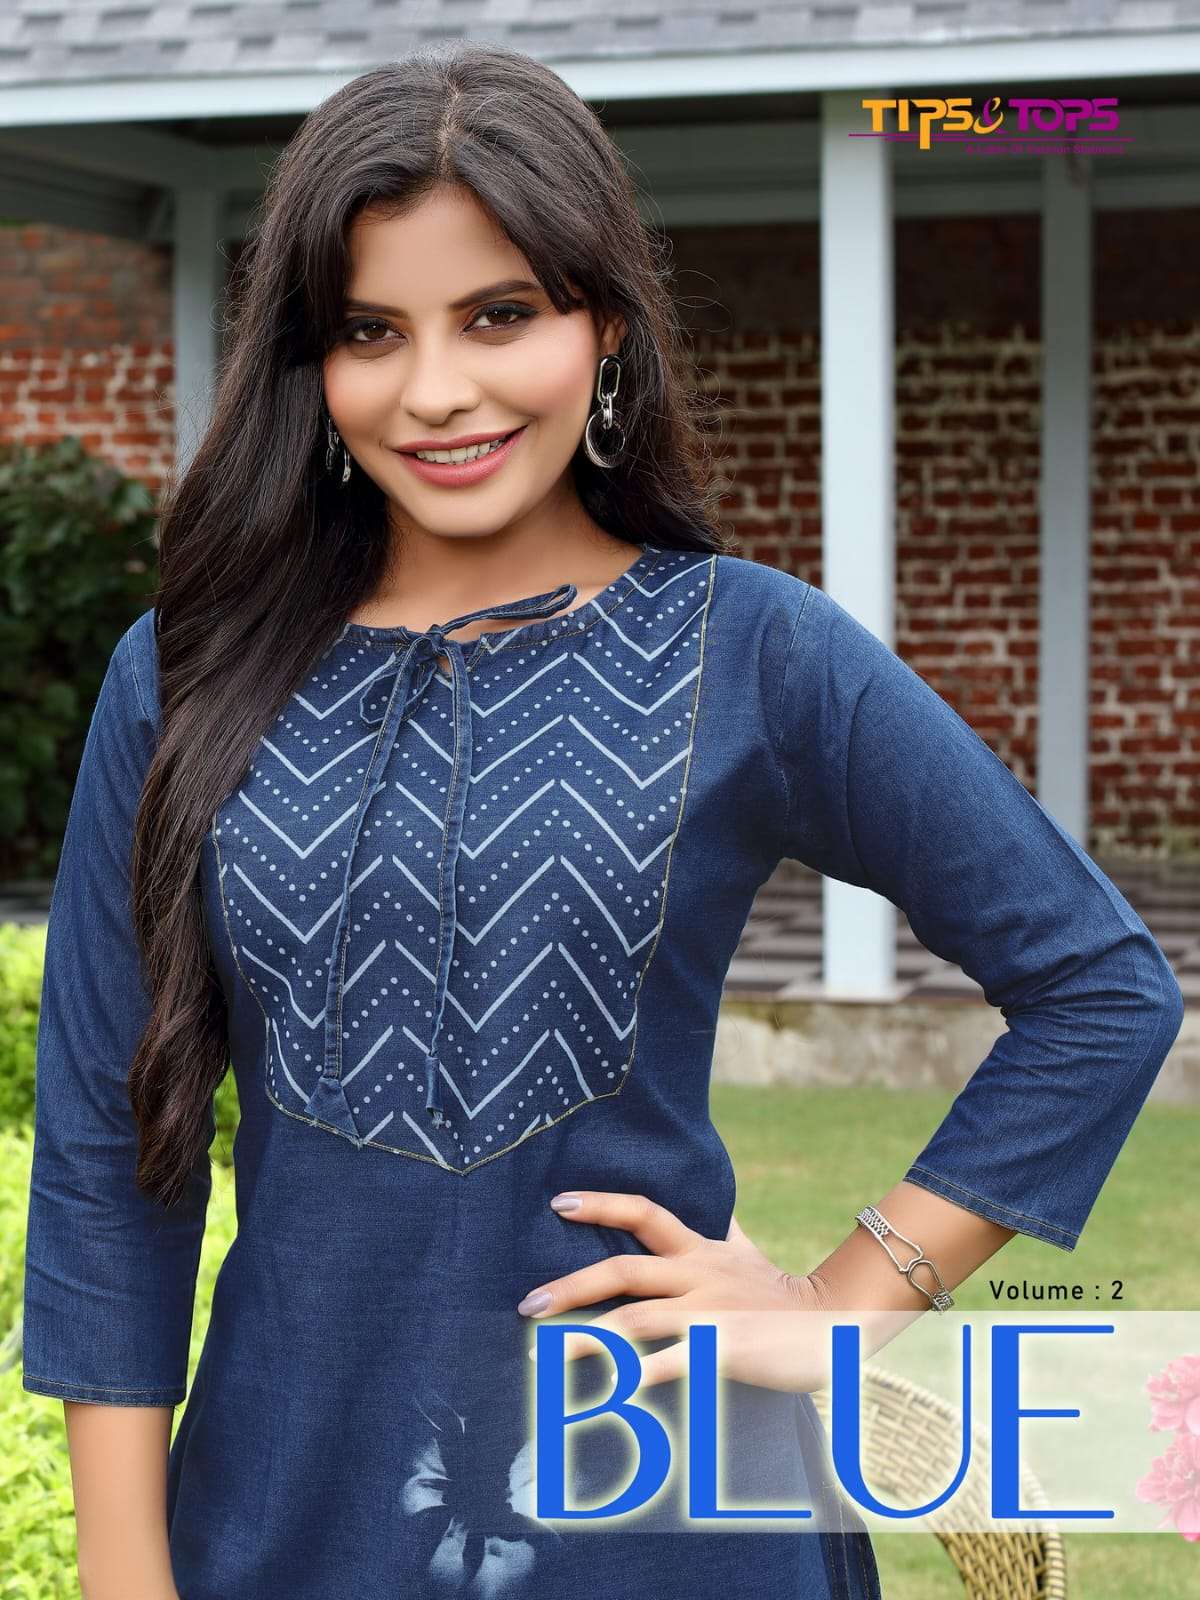 tips & tops blue vol 2 series series 201-206 cotton denim kurti 